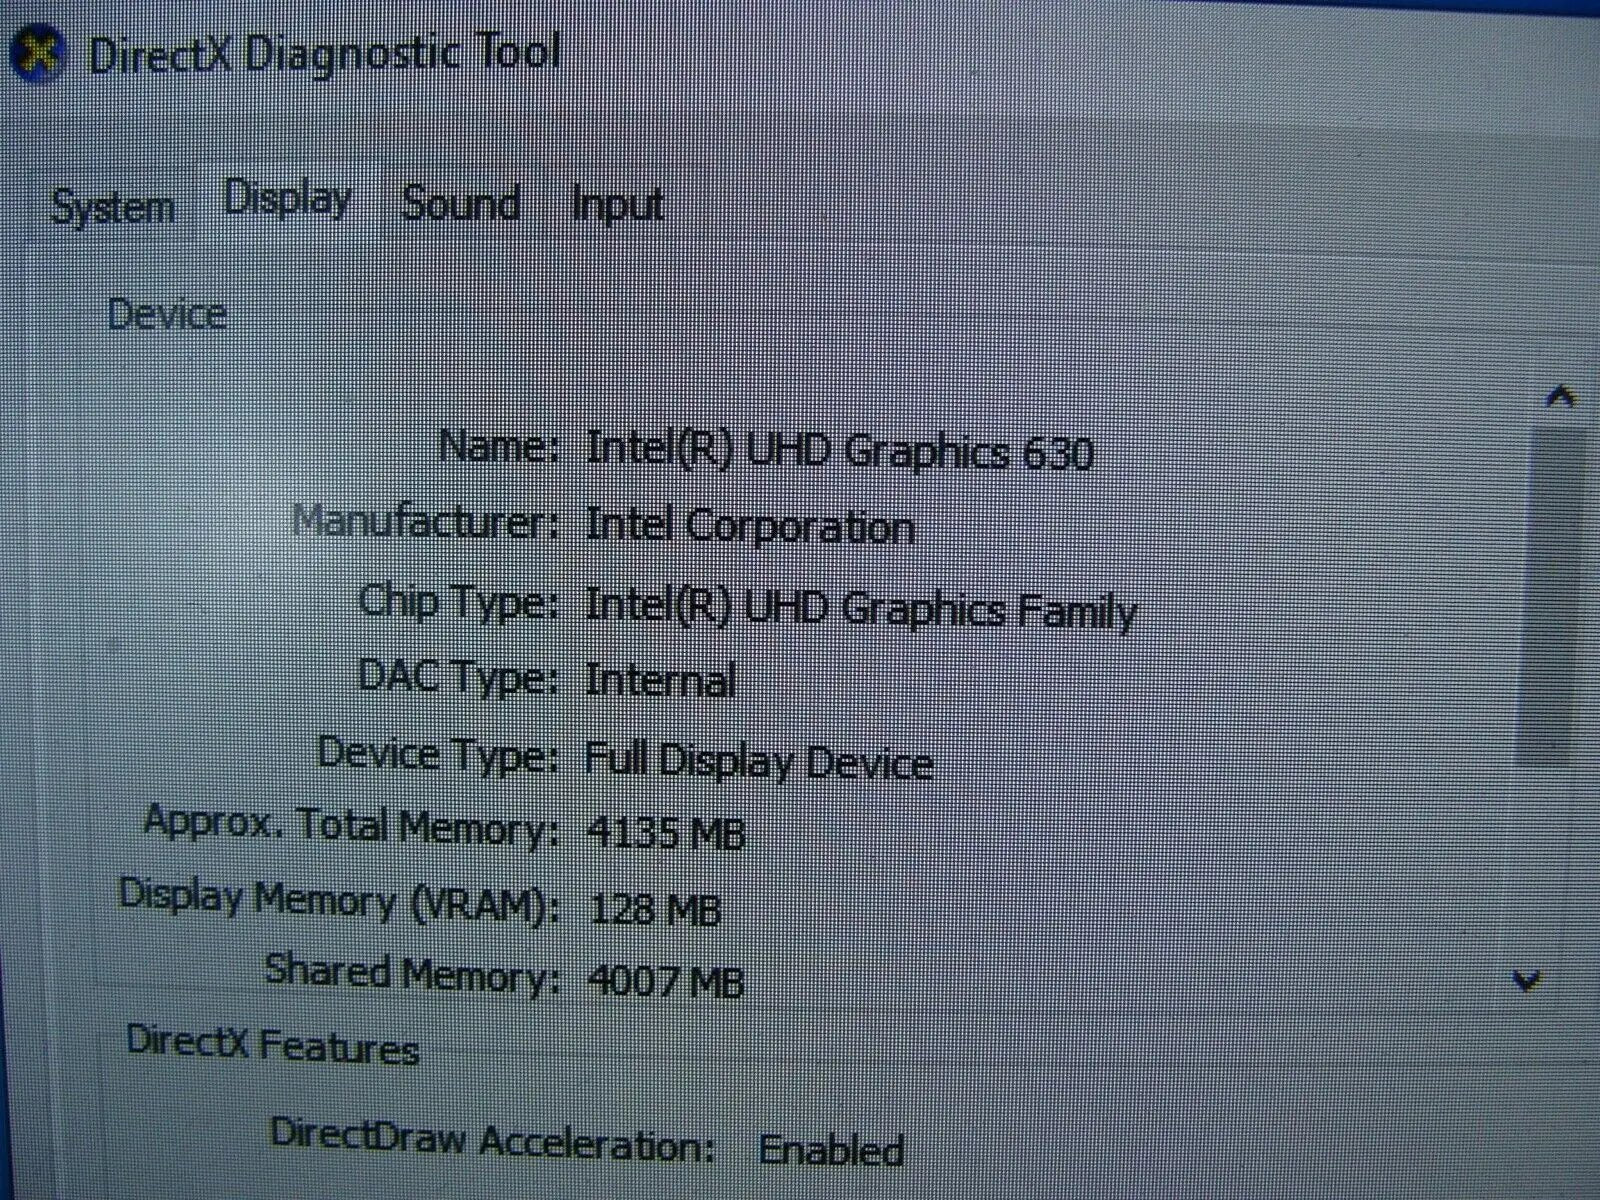 Powerful Wifi Gaming Dell Desktop 3060 MT i5-8400 8GB RAM 256GB SSD W10Pro DVDR